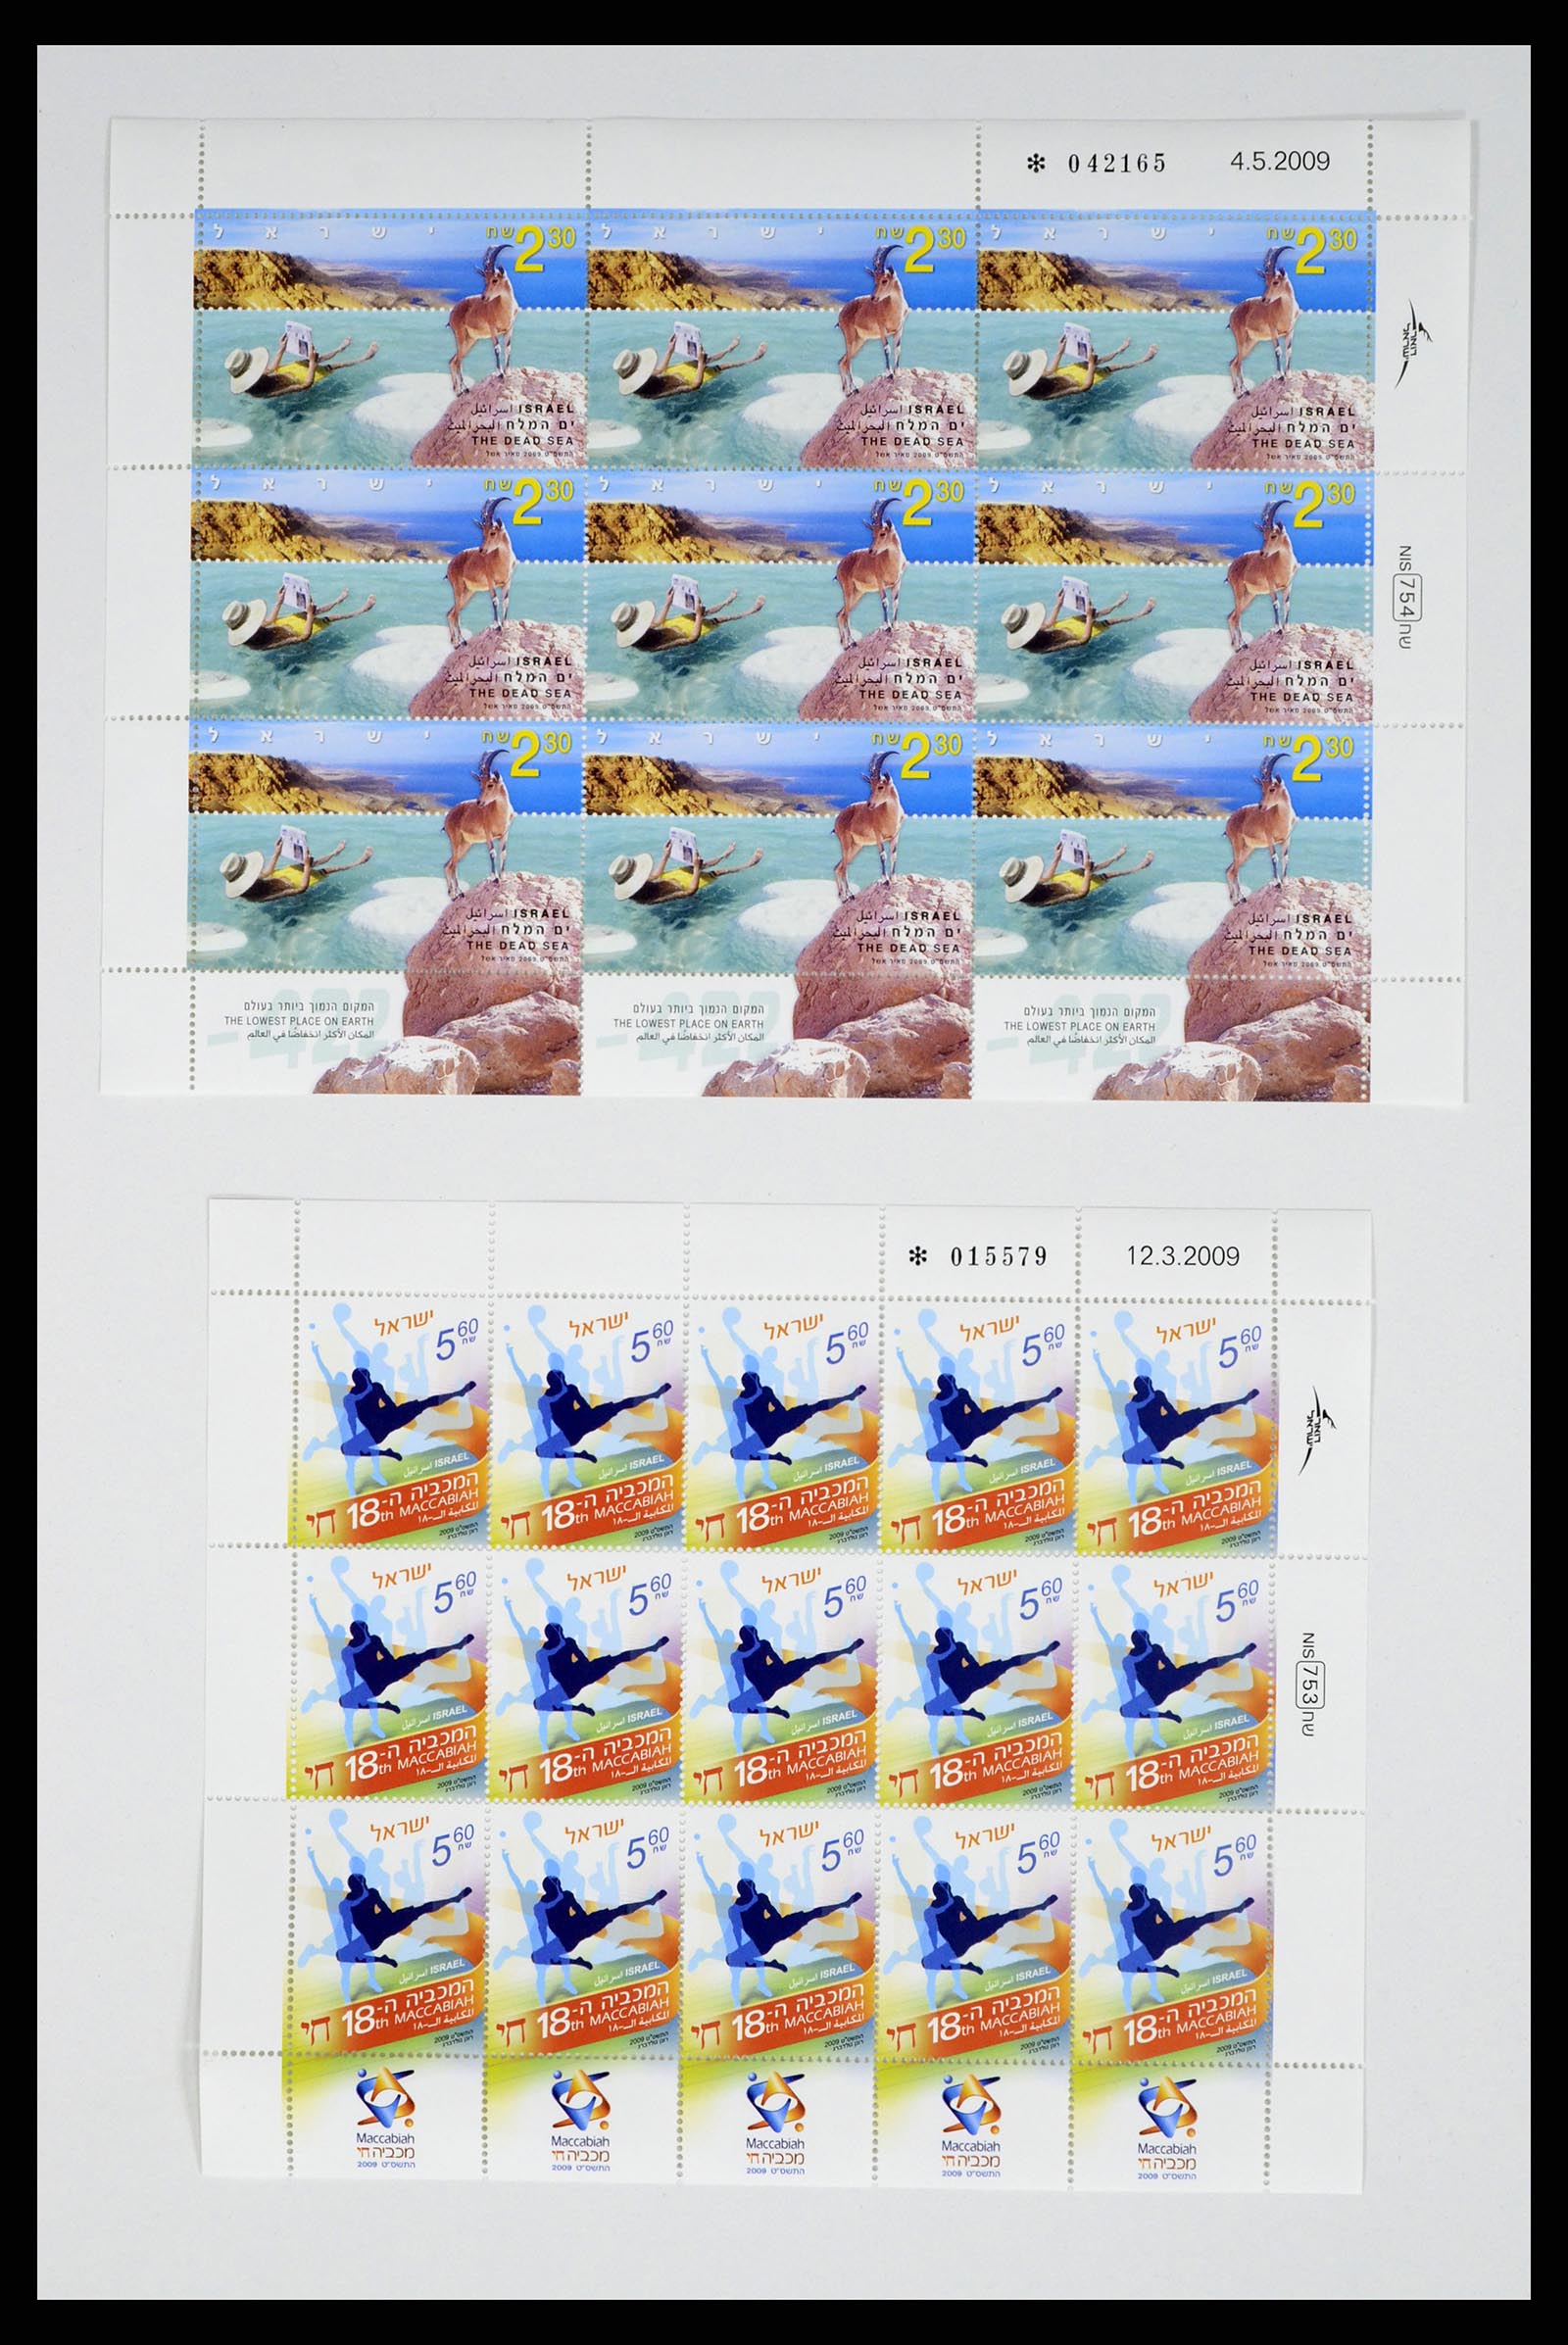 37779 020 - Stamp collection 37779 Israel sheetlets 1986-2009.